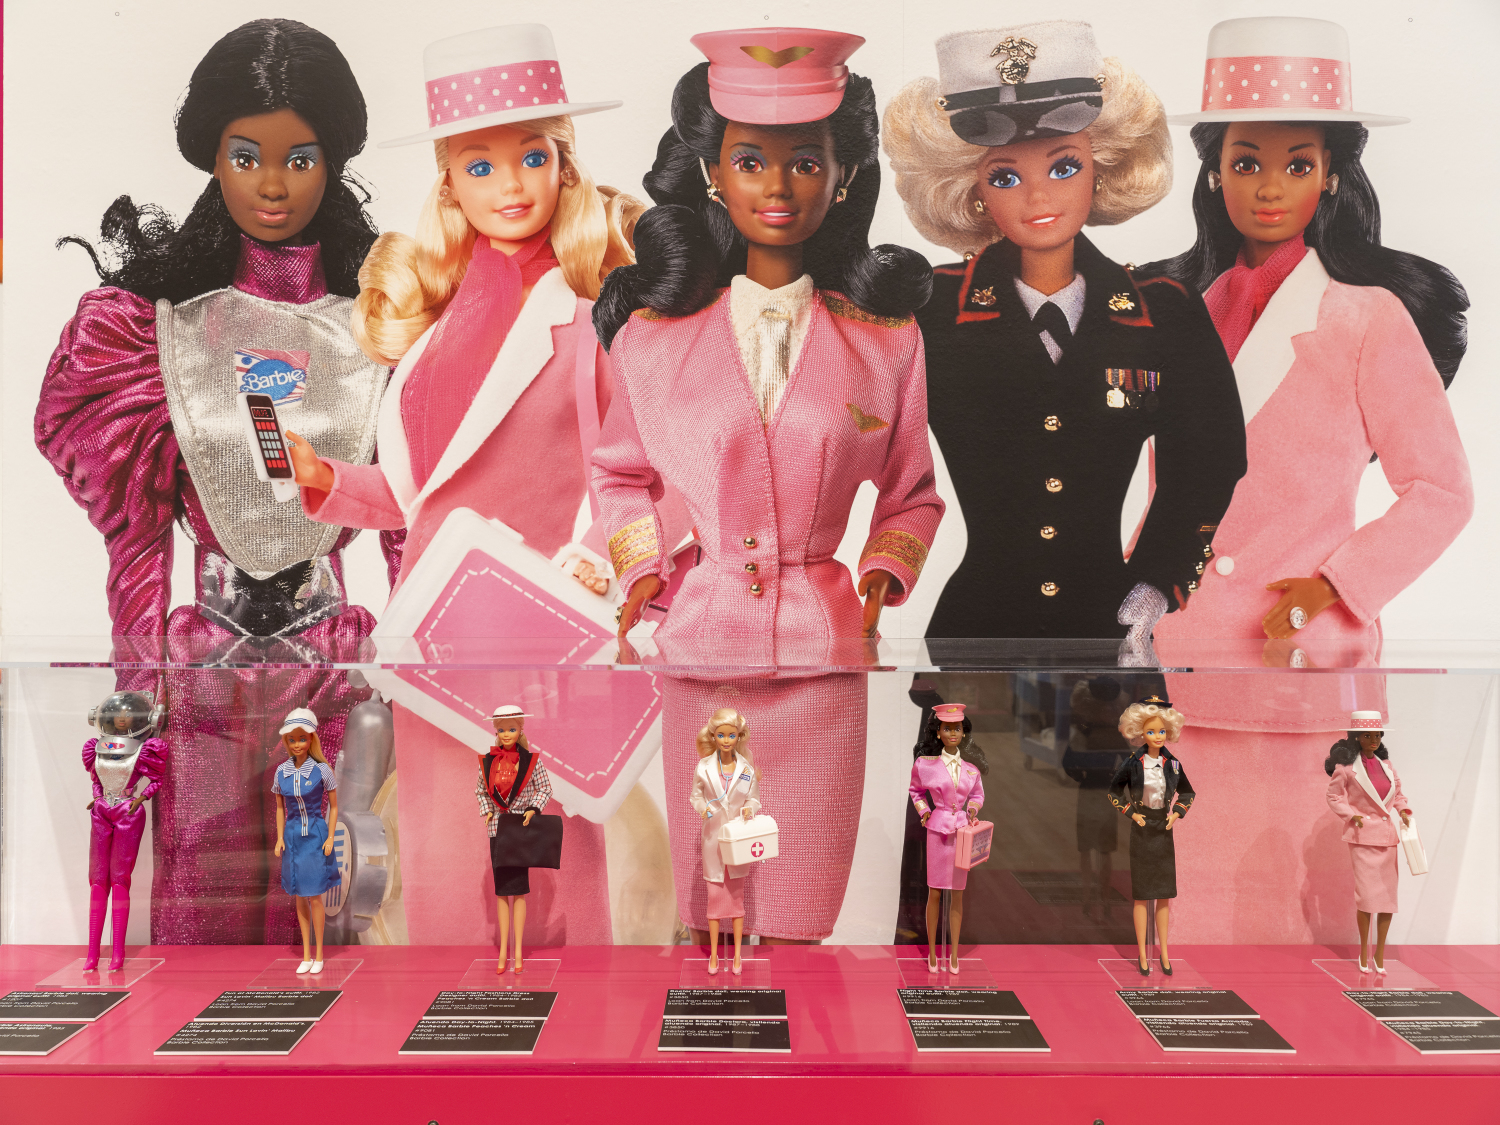 Barbie®: A Cultural Icon